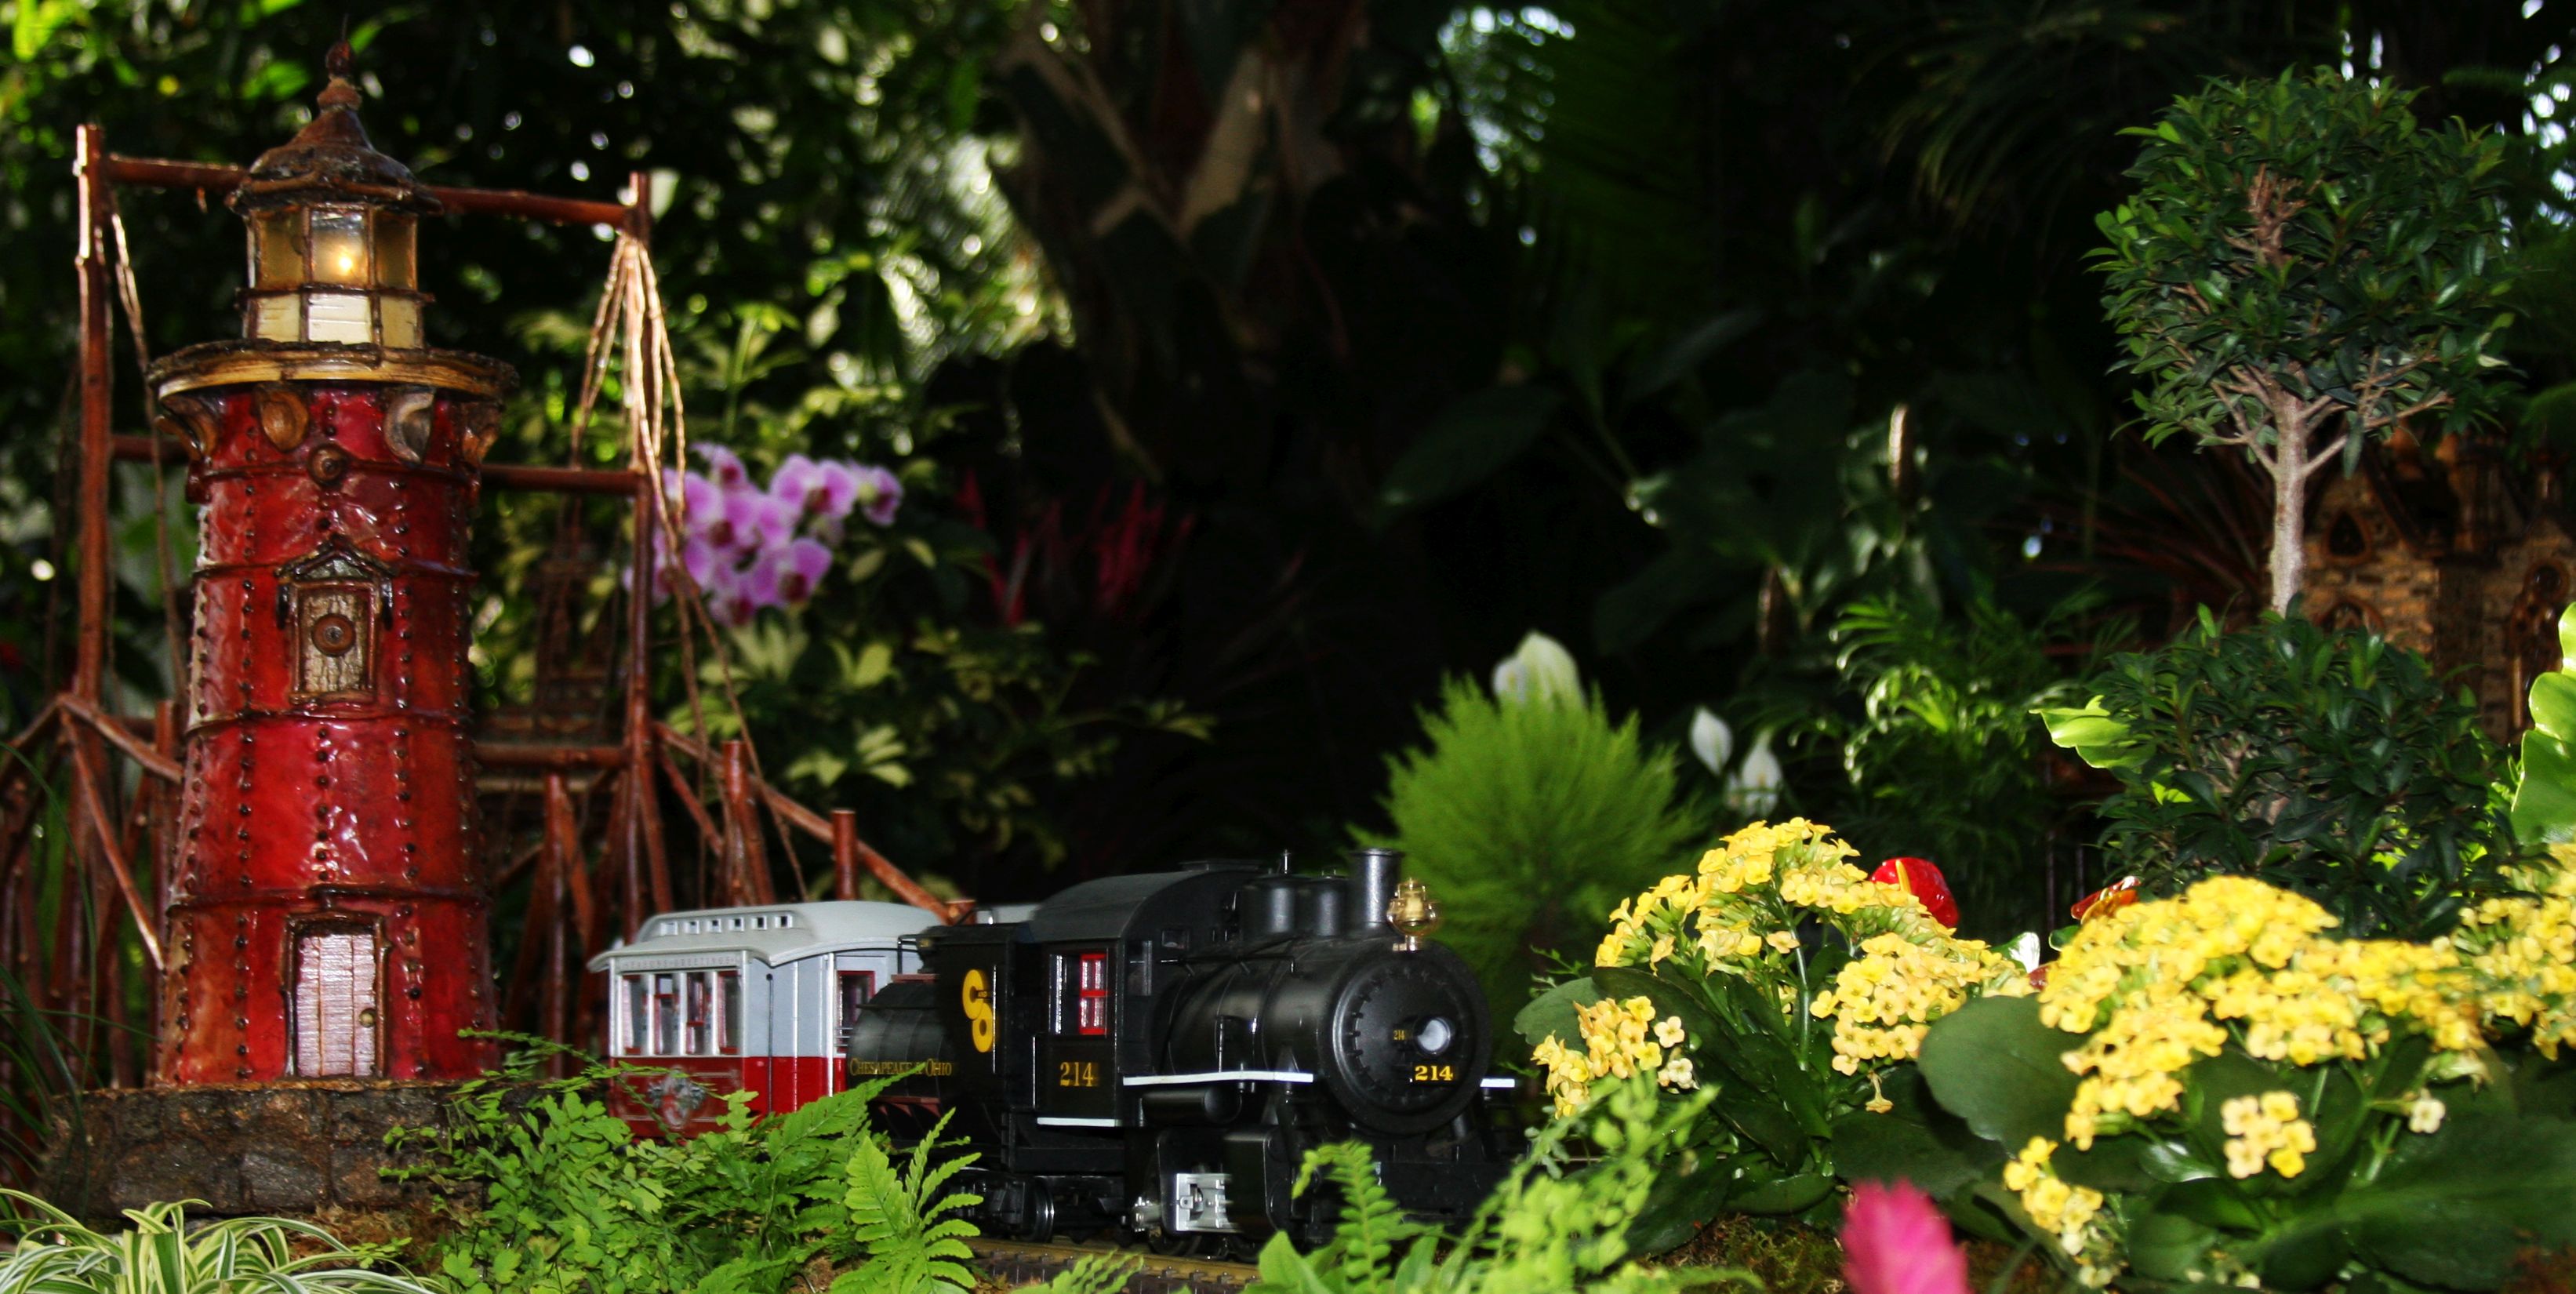 Holiday Train Show New York Botanical Garden Tombarat